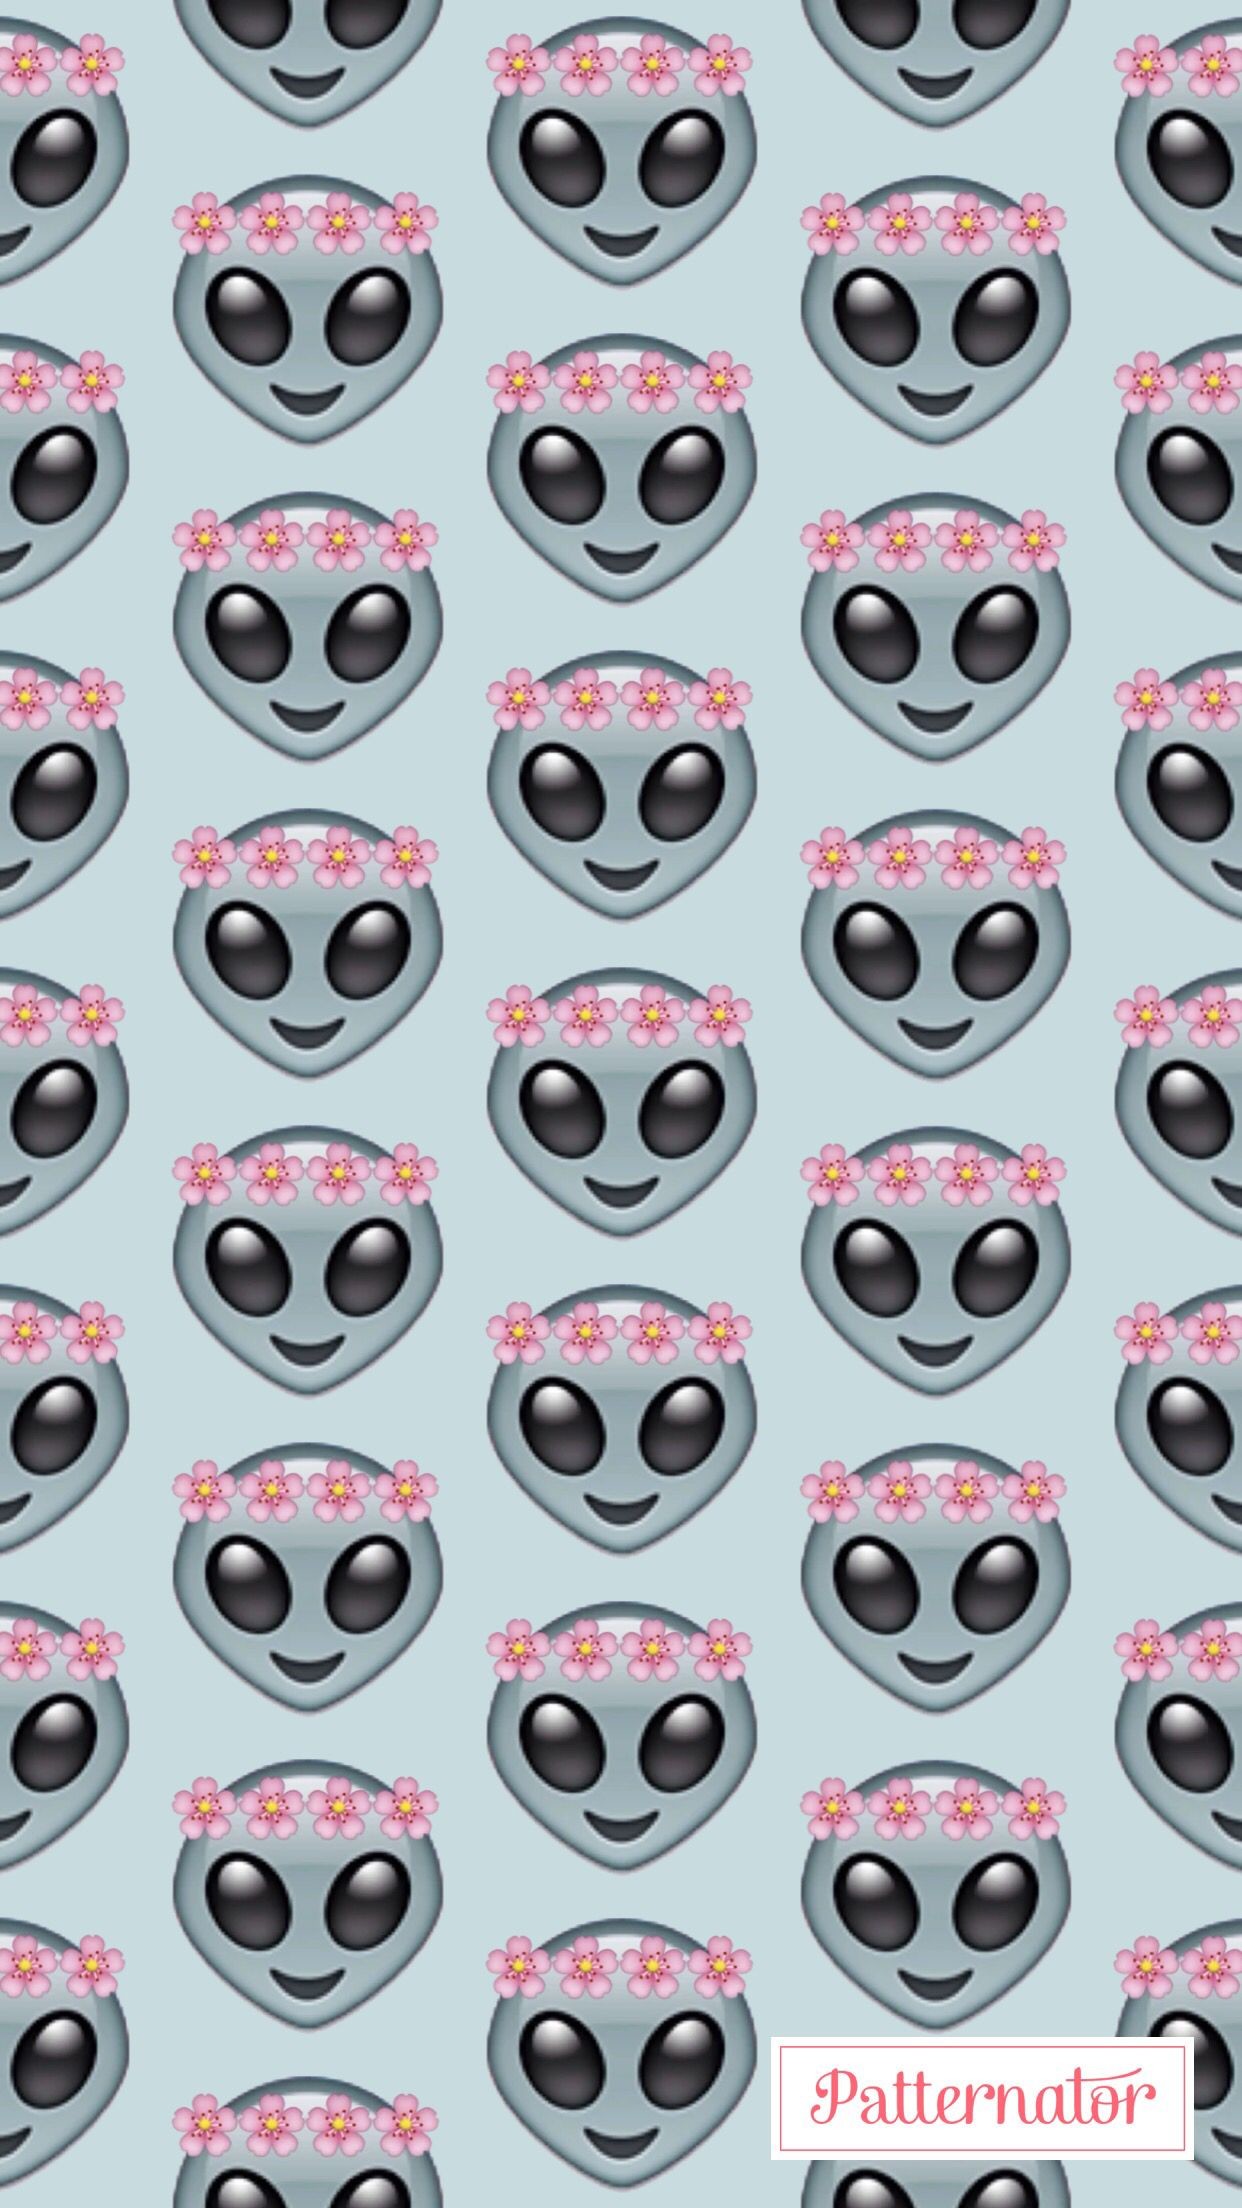 Alien Emoji Wallpaper Free Alien Emoji Background